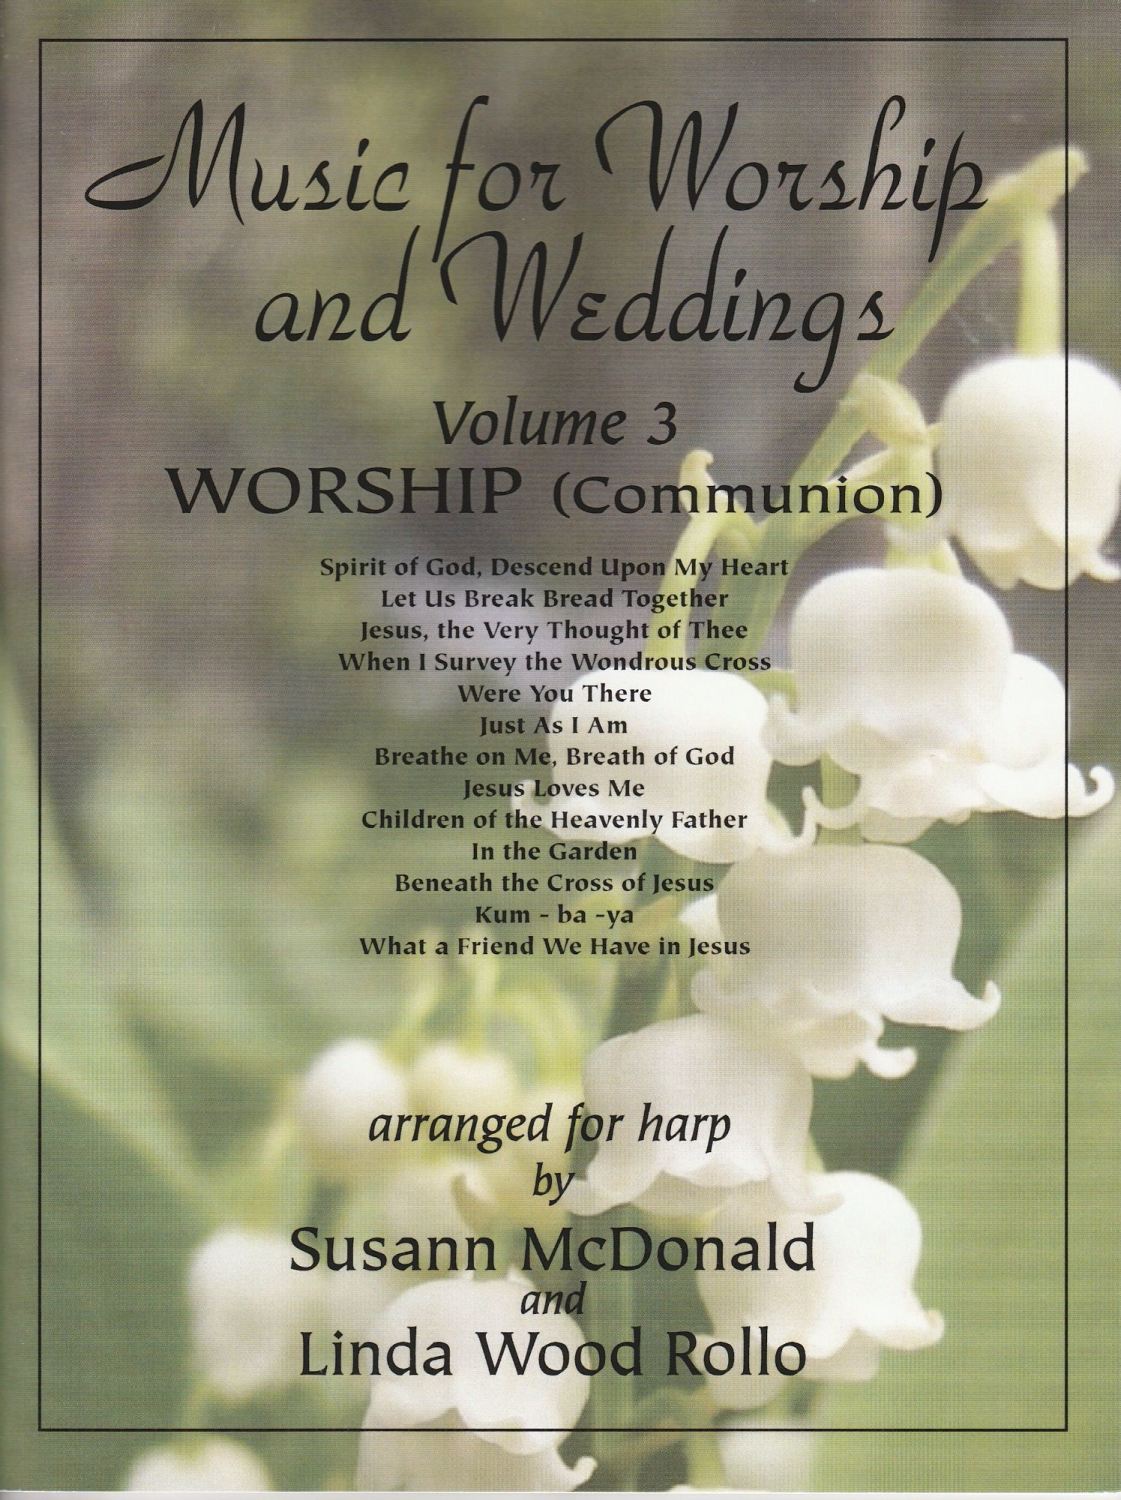 Music for Worship and Weddings Volume 3 - Worship (Communion)